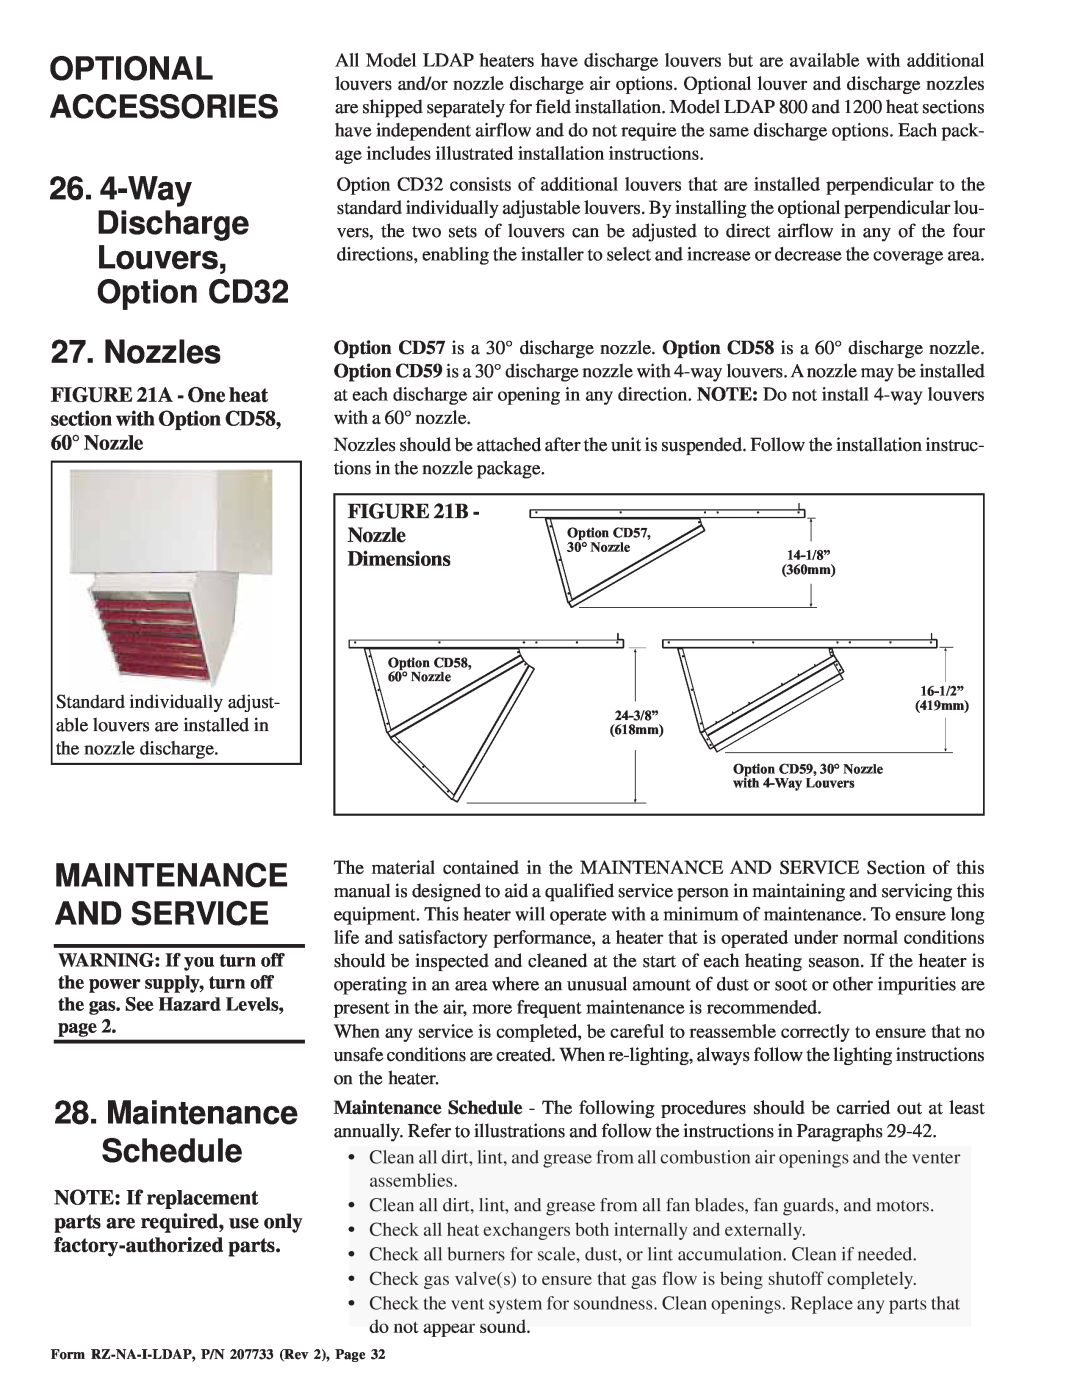 Thomas & Betts LDAP 1200 Optional Accessories, WayDischarge Louvers, Option CD32 27.Nozzles, Maintenance And Service, B 